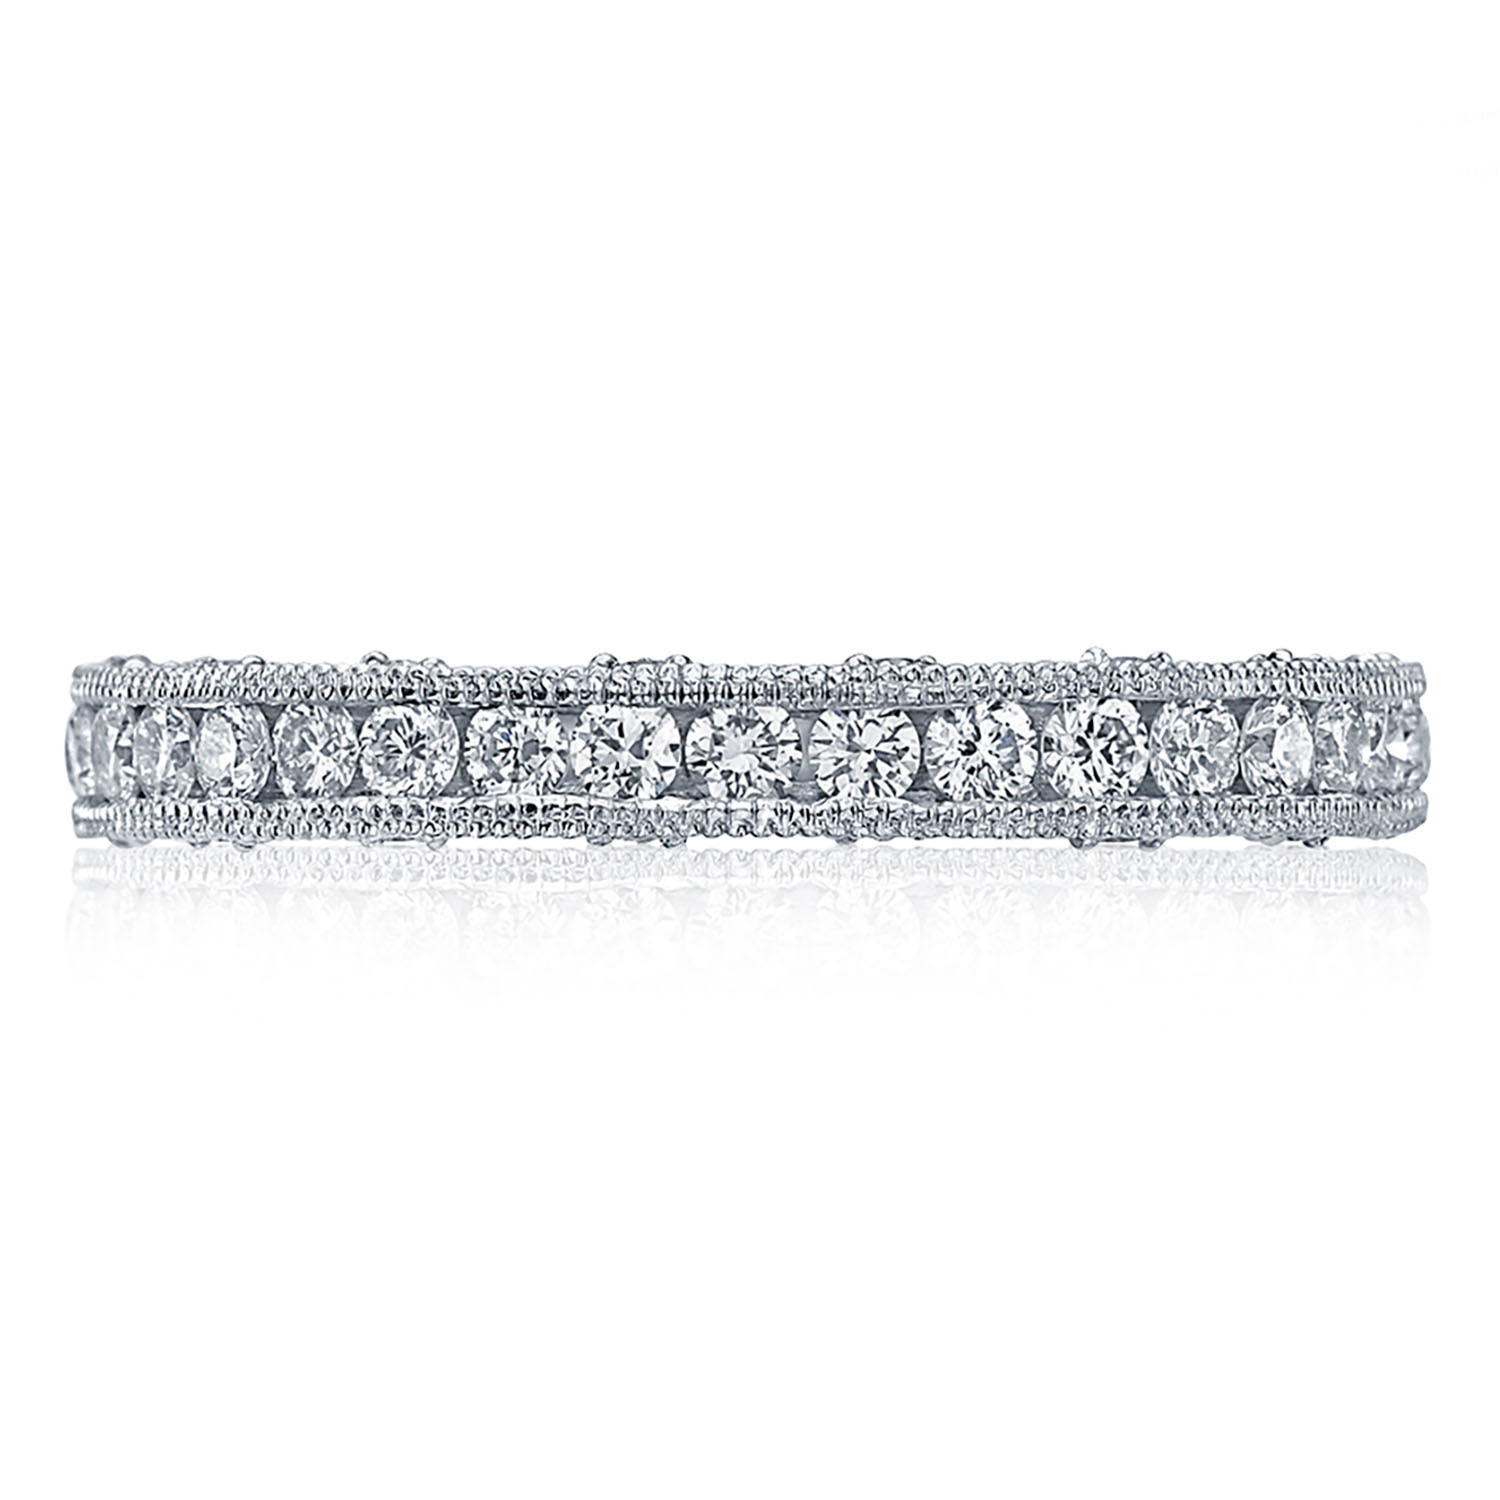 Tacori:  Platinum  Reverse Crescent Milgrain Edge Channel Set Wedding Band With 0.43Tw Round Diamonds
Ring Size: 6.5